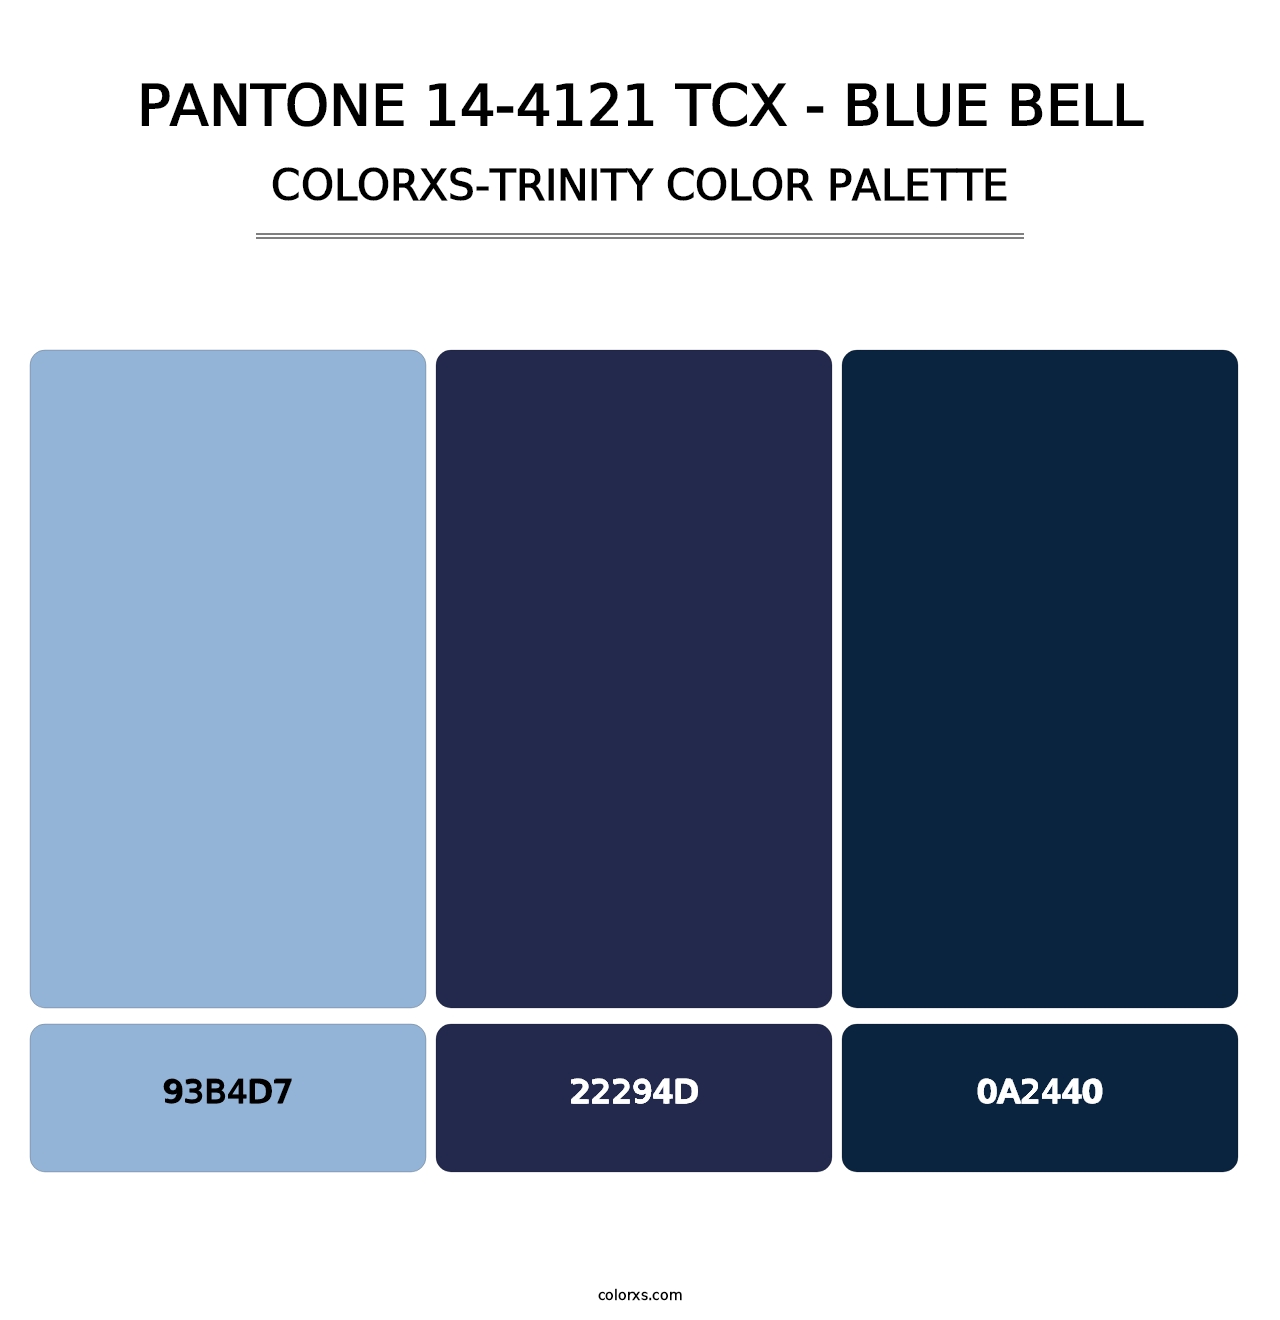 PANTONE 14-4121 TCX - Blue Bell - Colorxs Trinity Palette